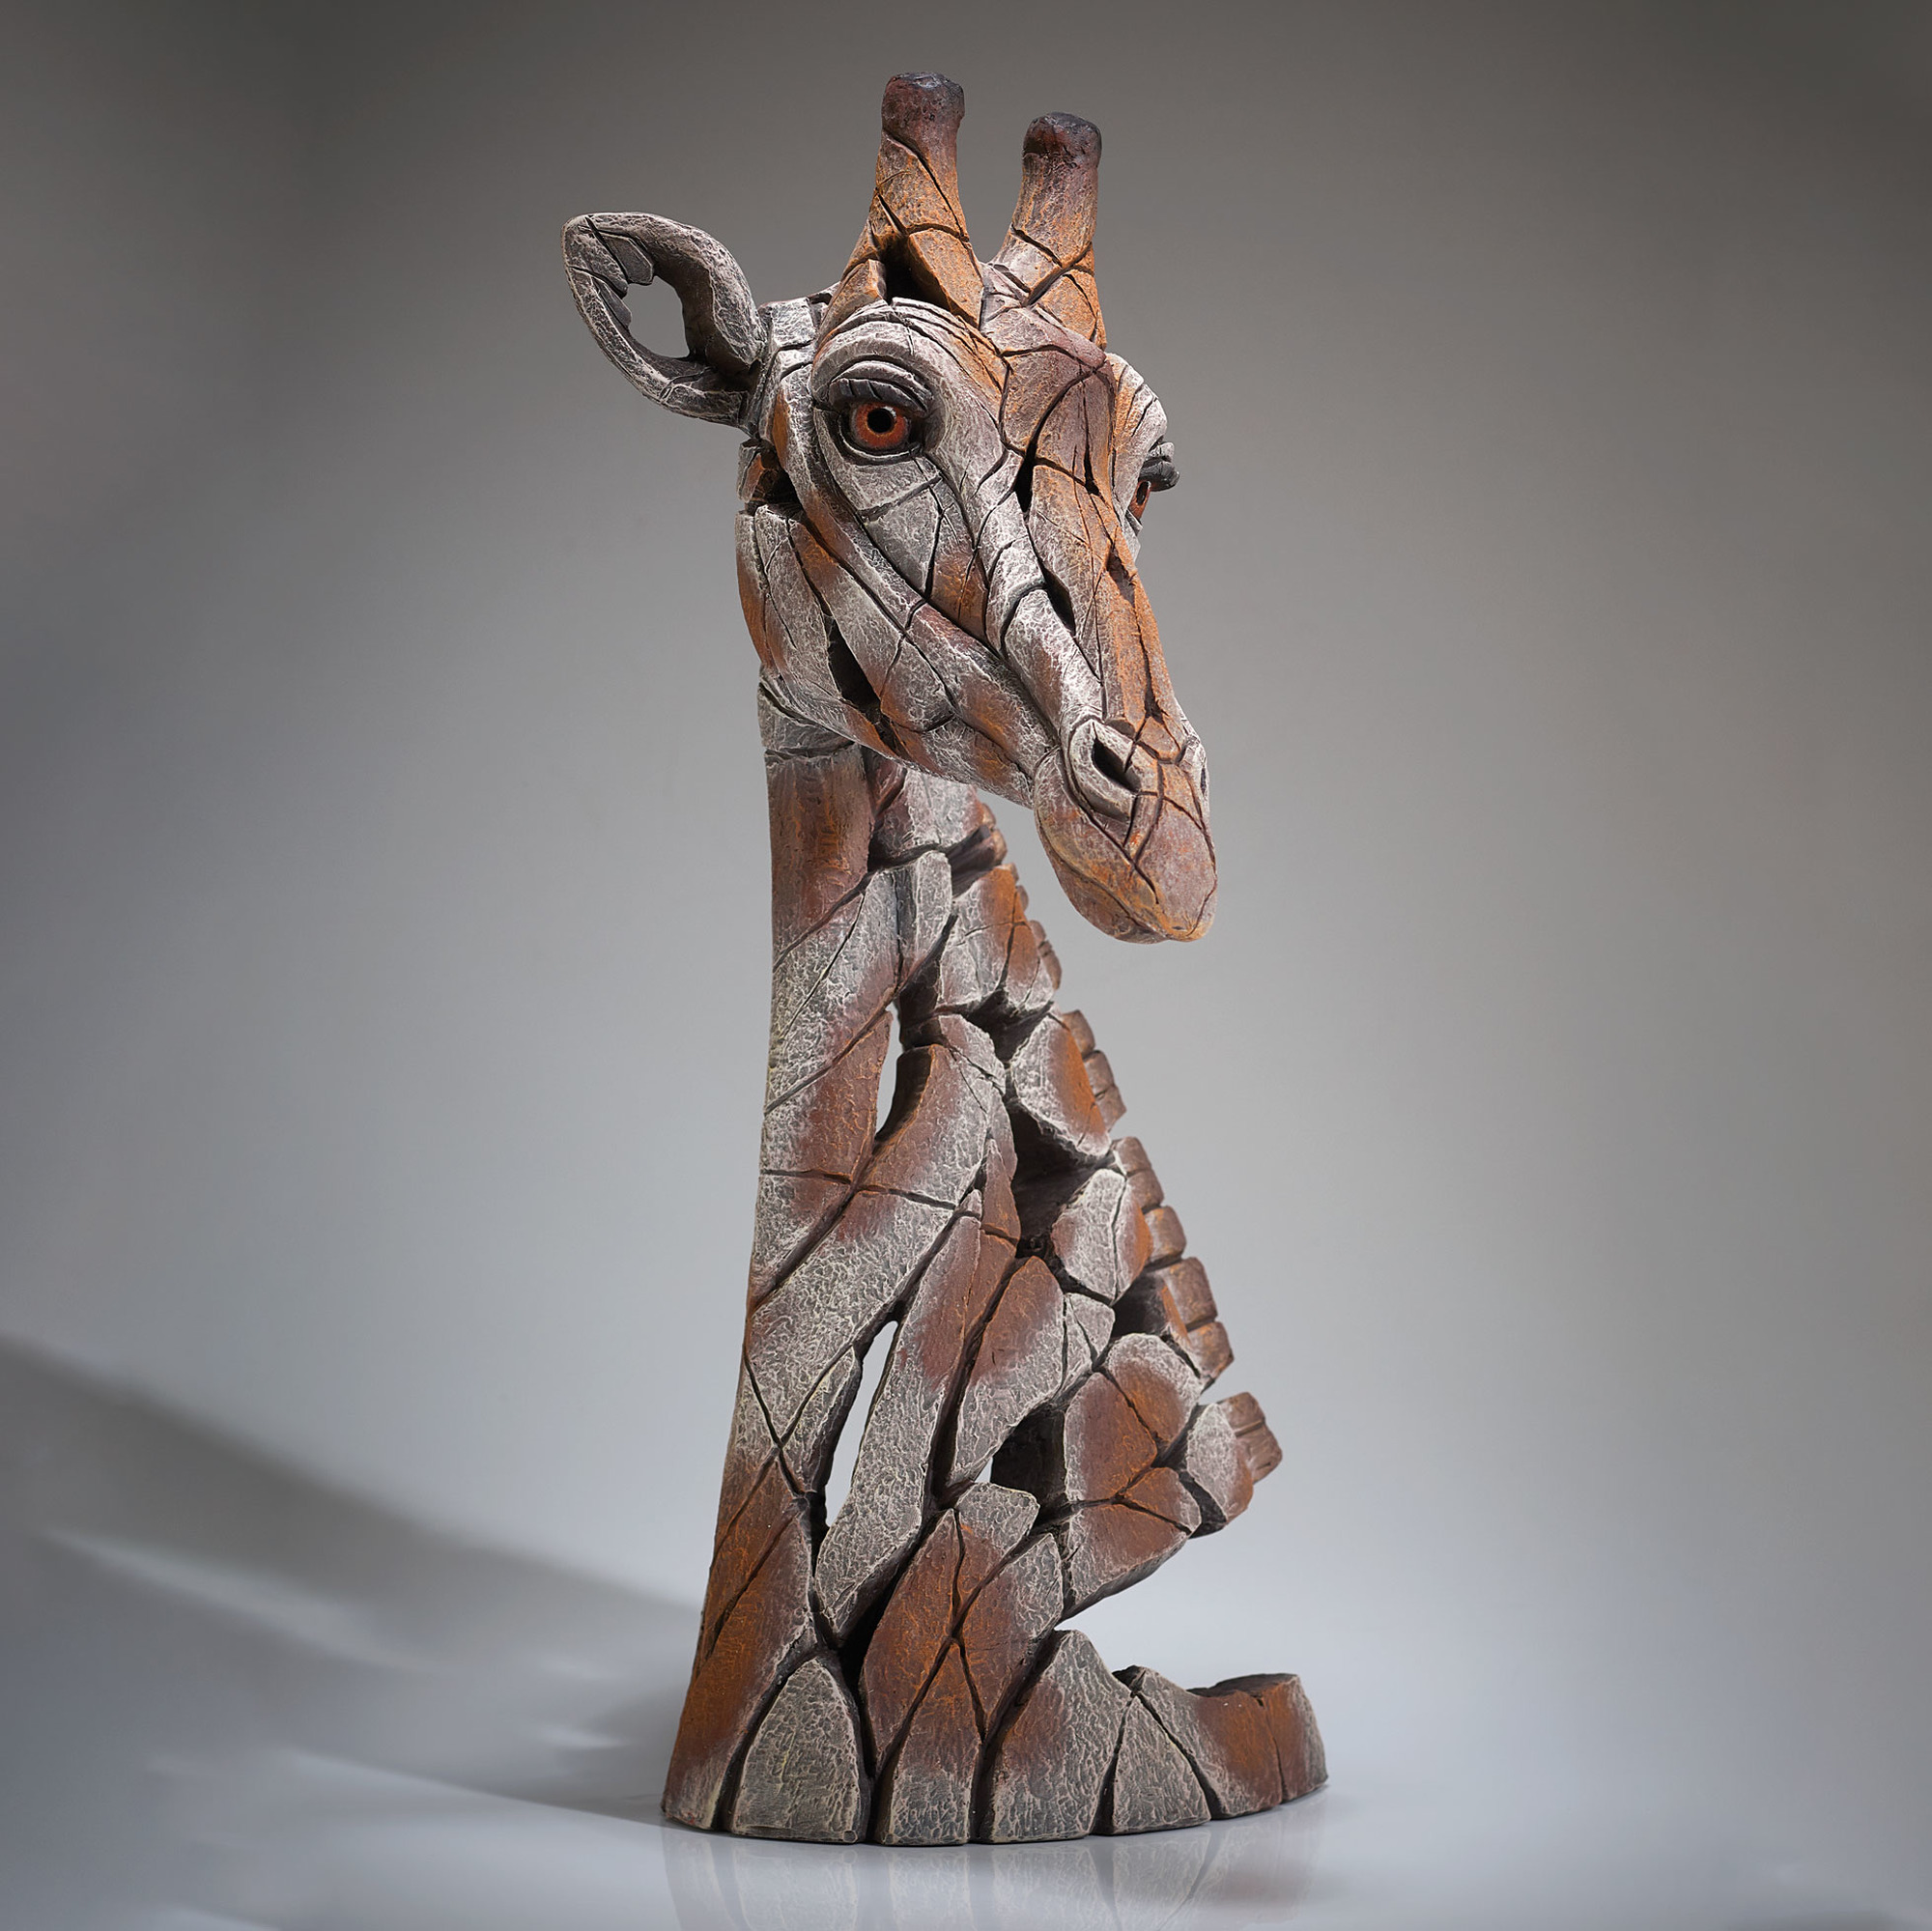 Enesco Gifts Matt Buckley The Edge Sculpture Giraffe Sculpture Free Shipping Iveys Gifts And Decor